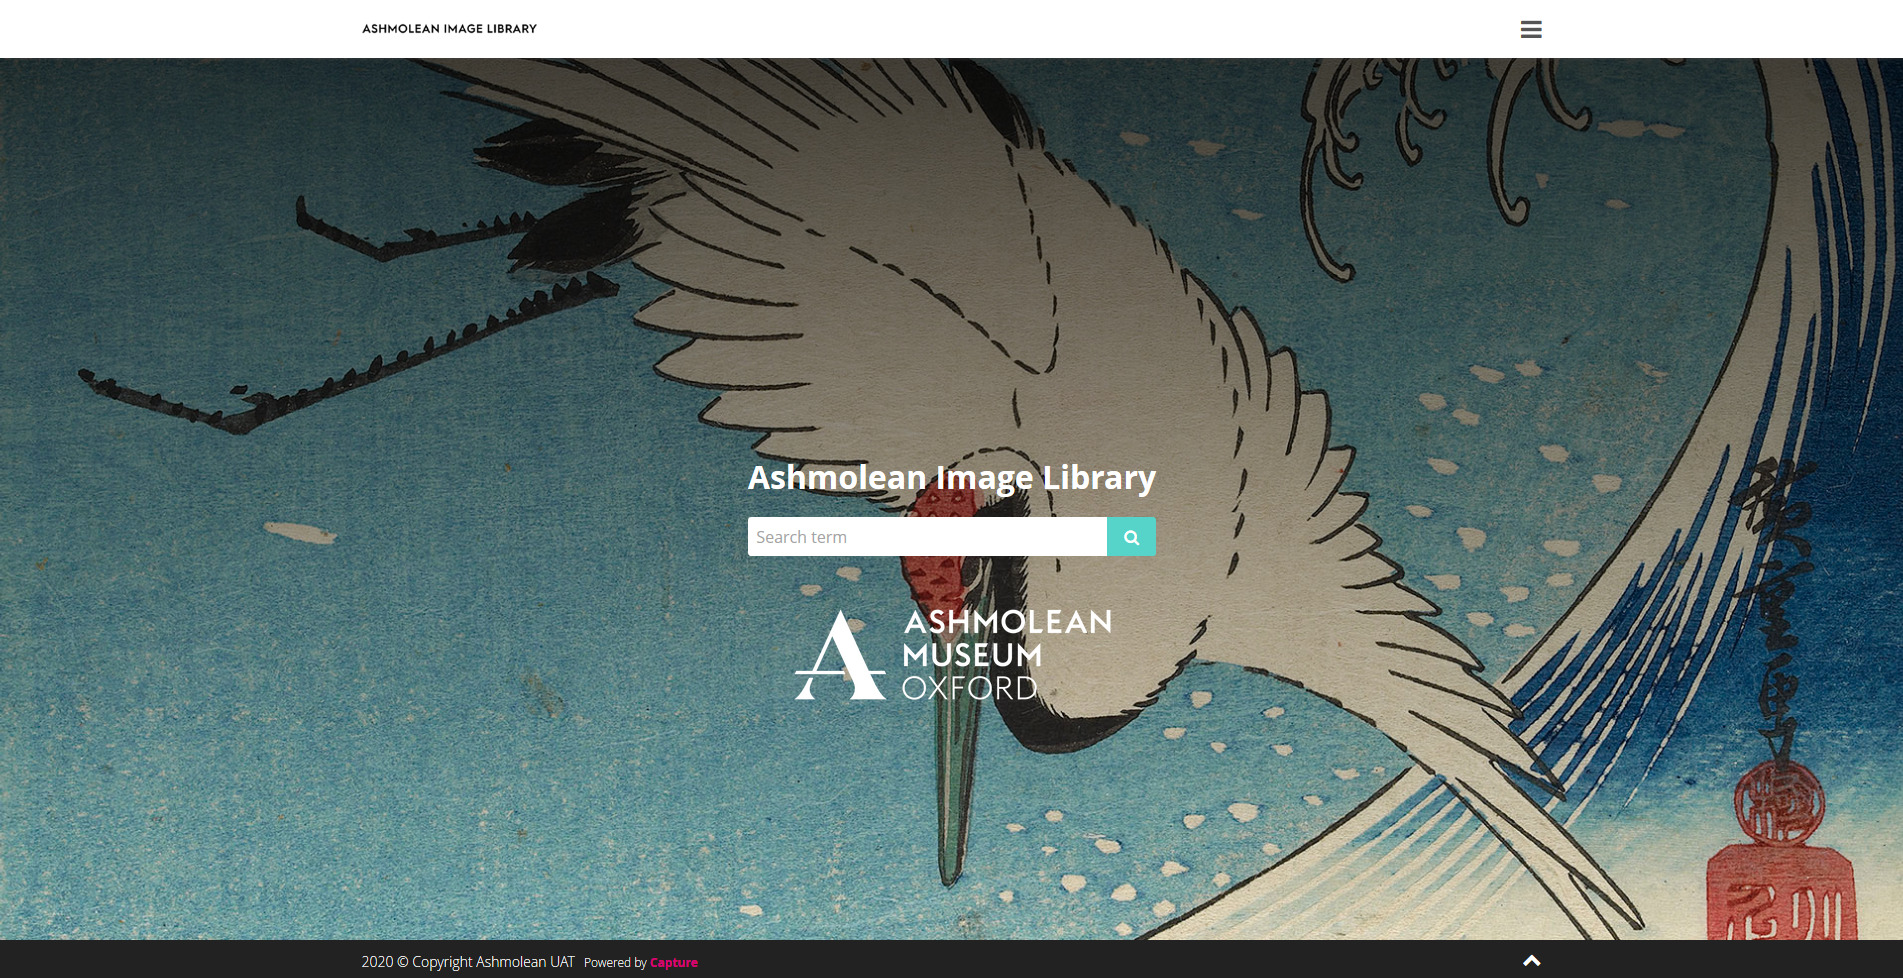 Ashmolean Museum Image Library